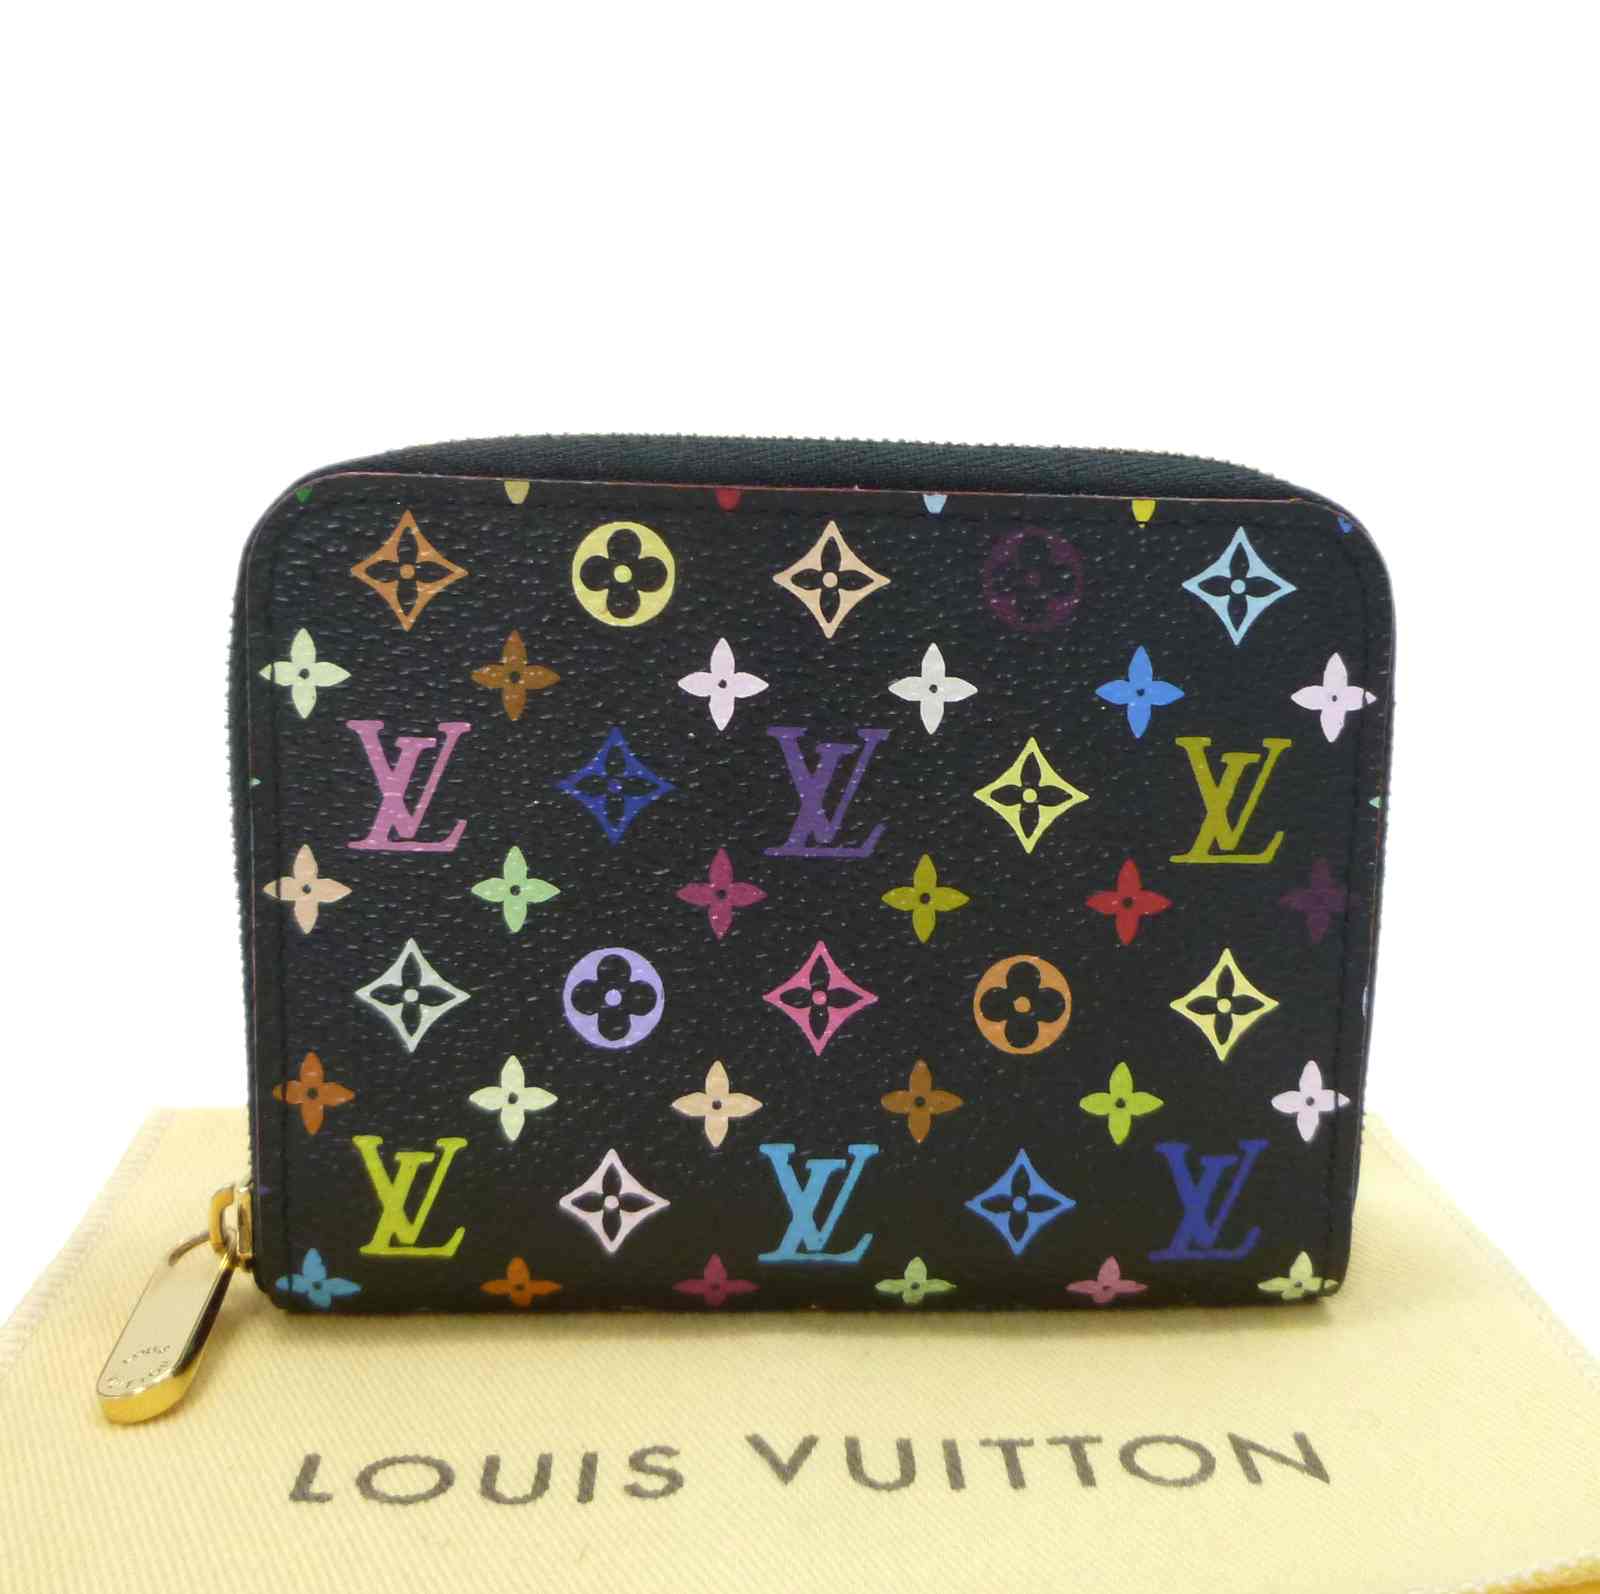 【Louis Vuitton】ジッピーコインパース マルチカラー ブラック